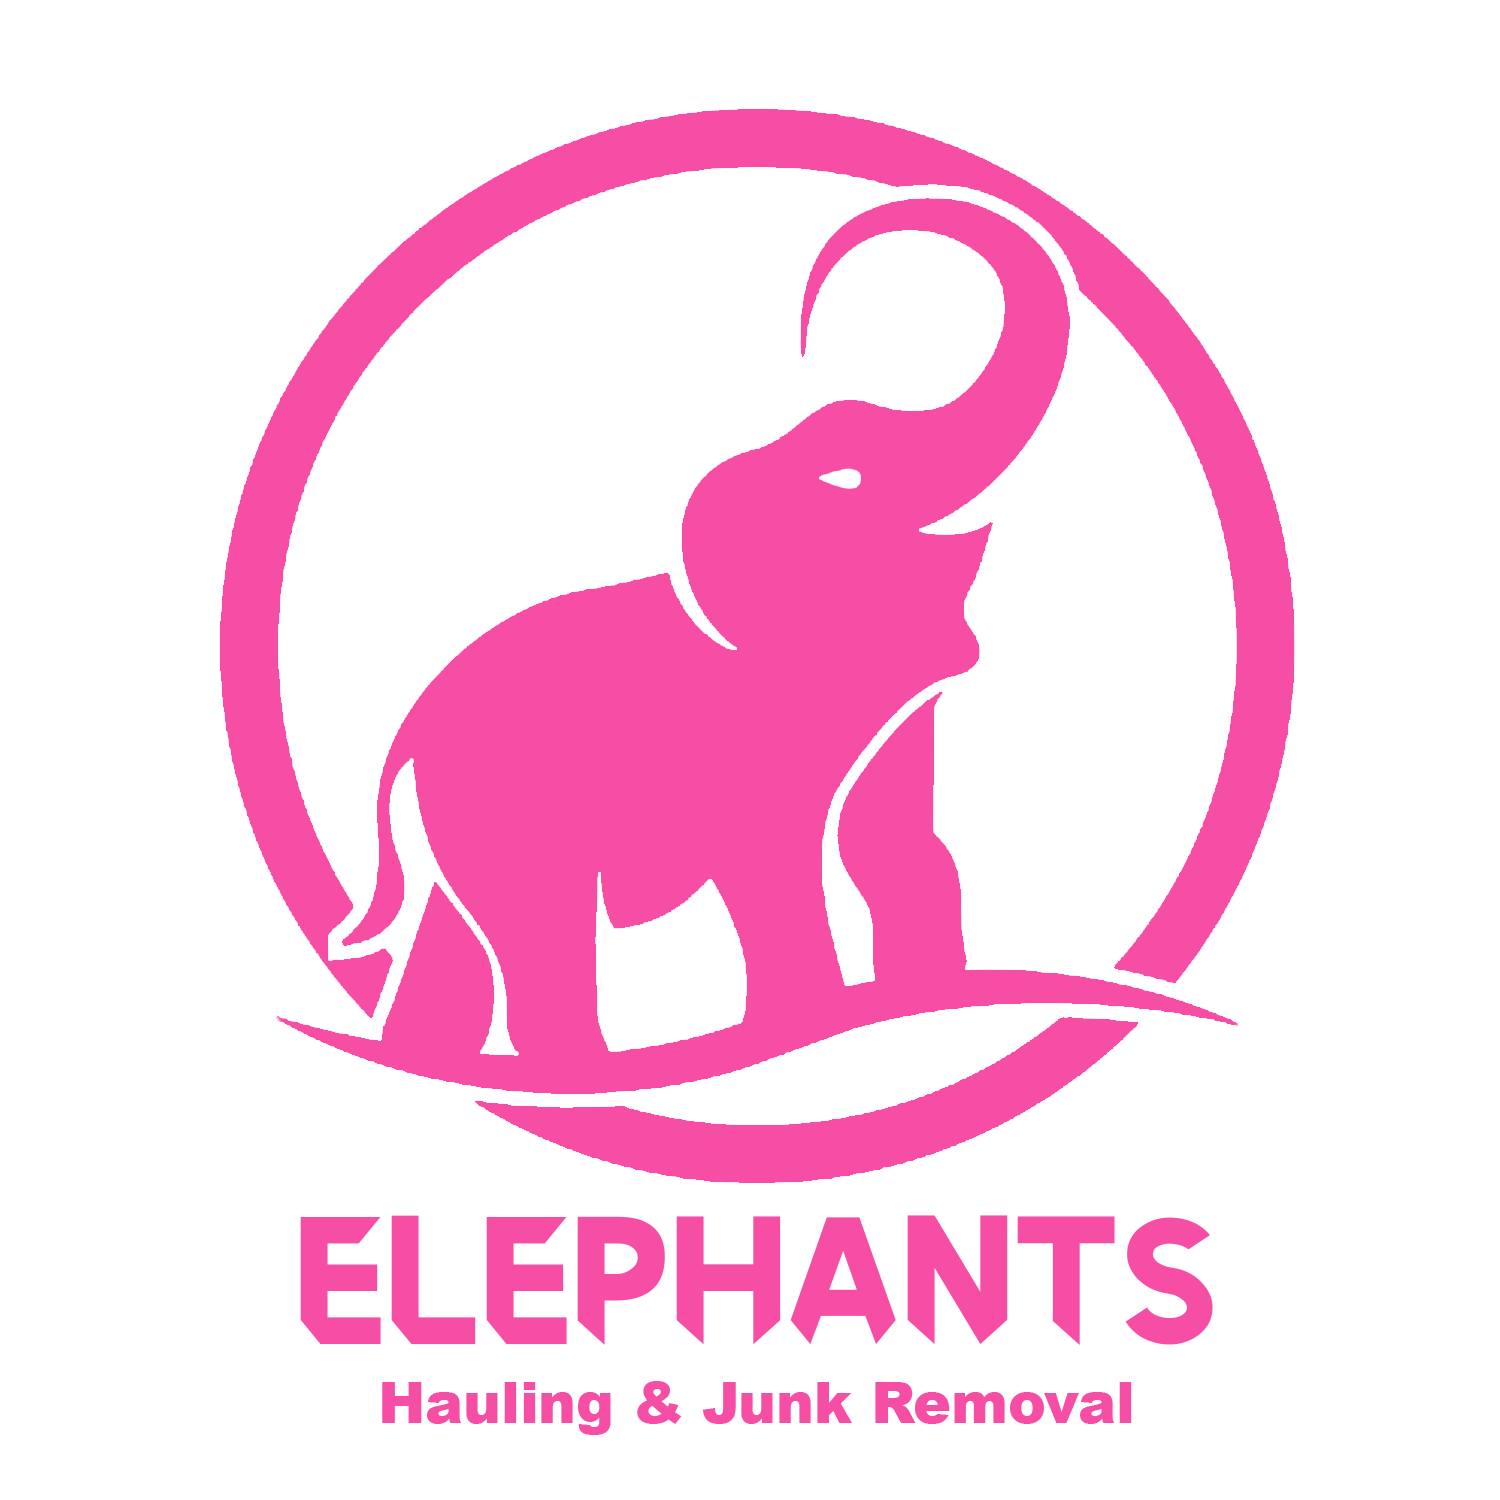 Elephants dumpster rental & junk removal